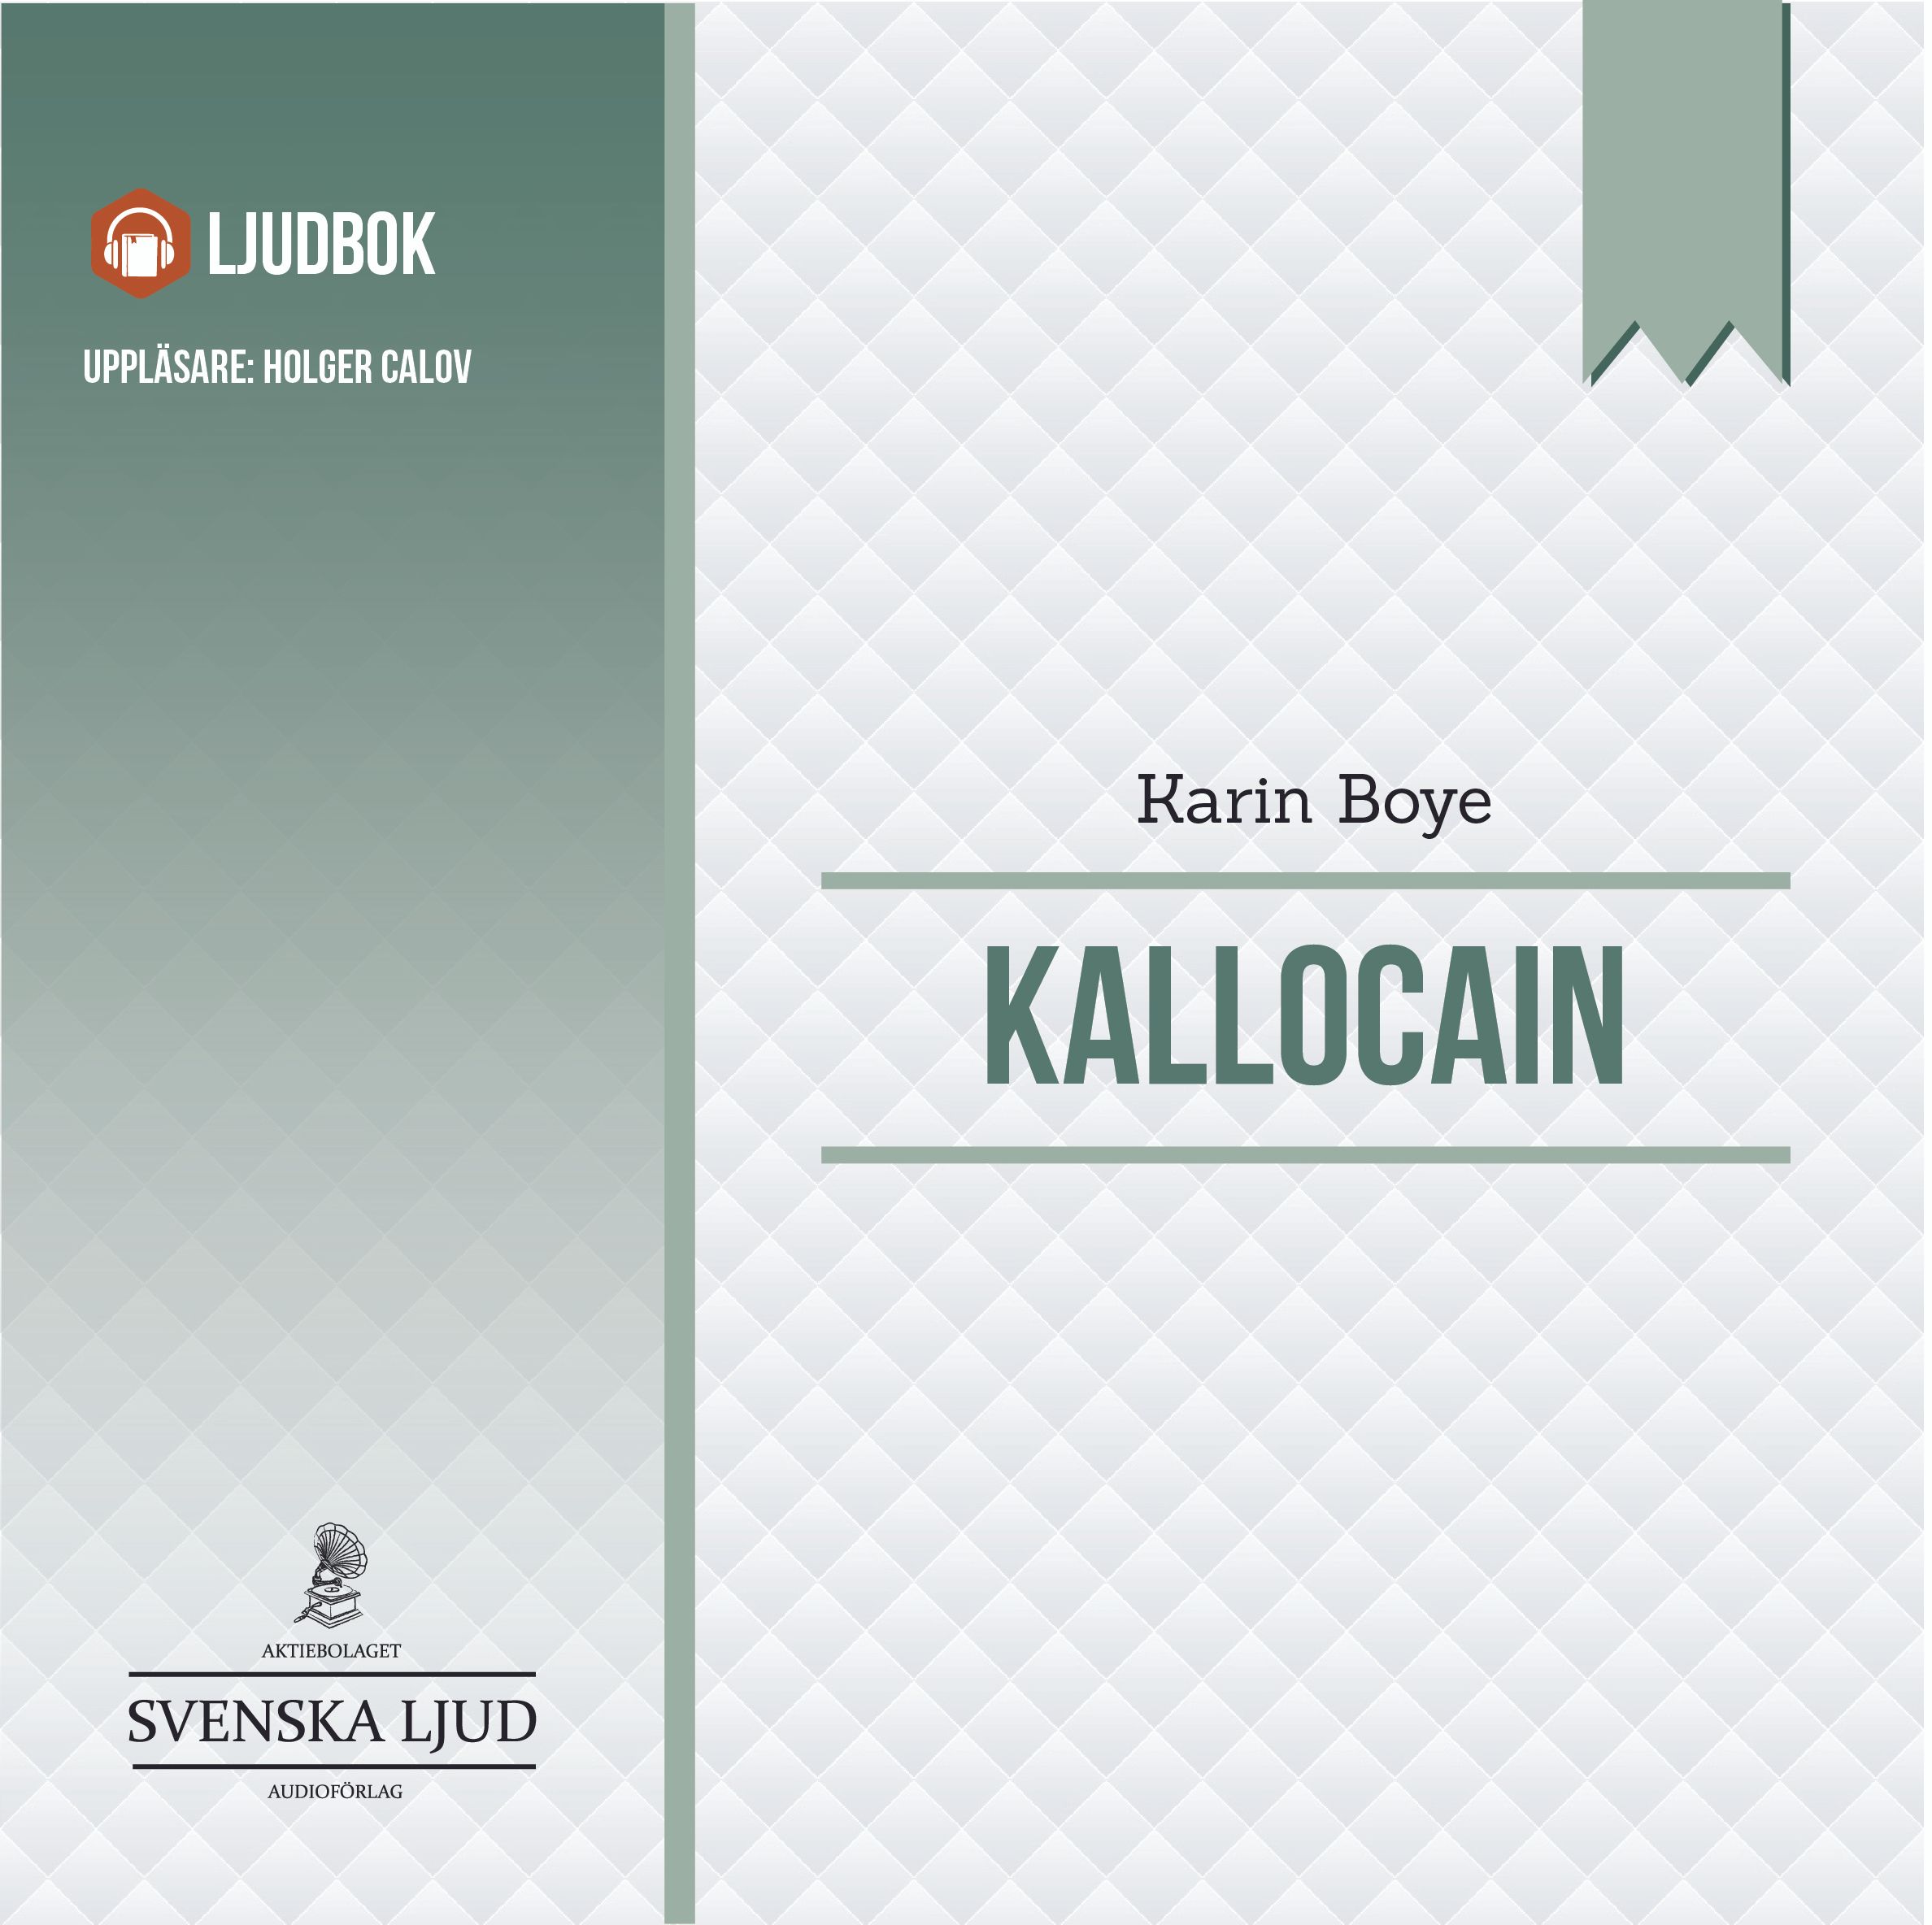 Kallocain, audiobook by Karin Boye